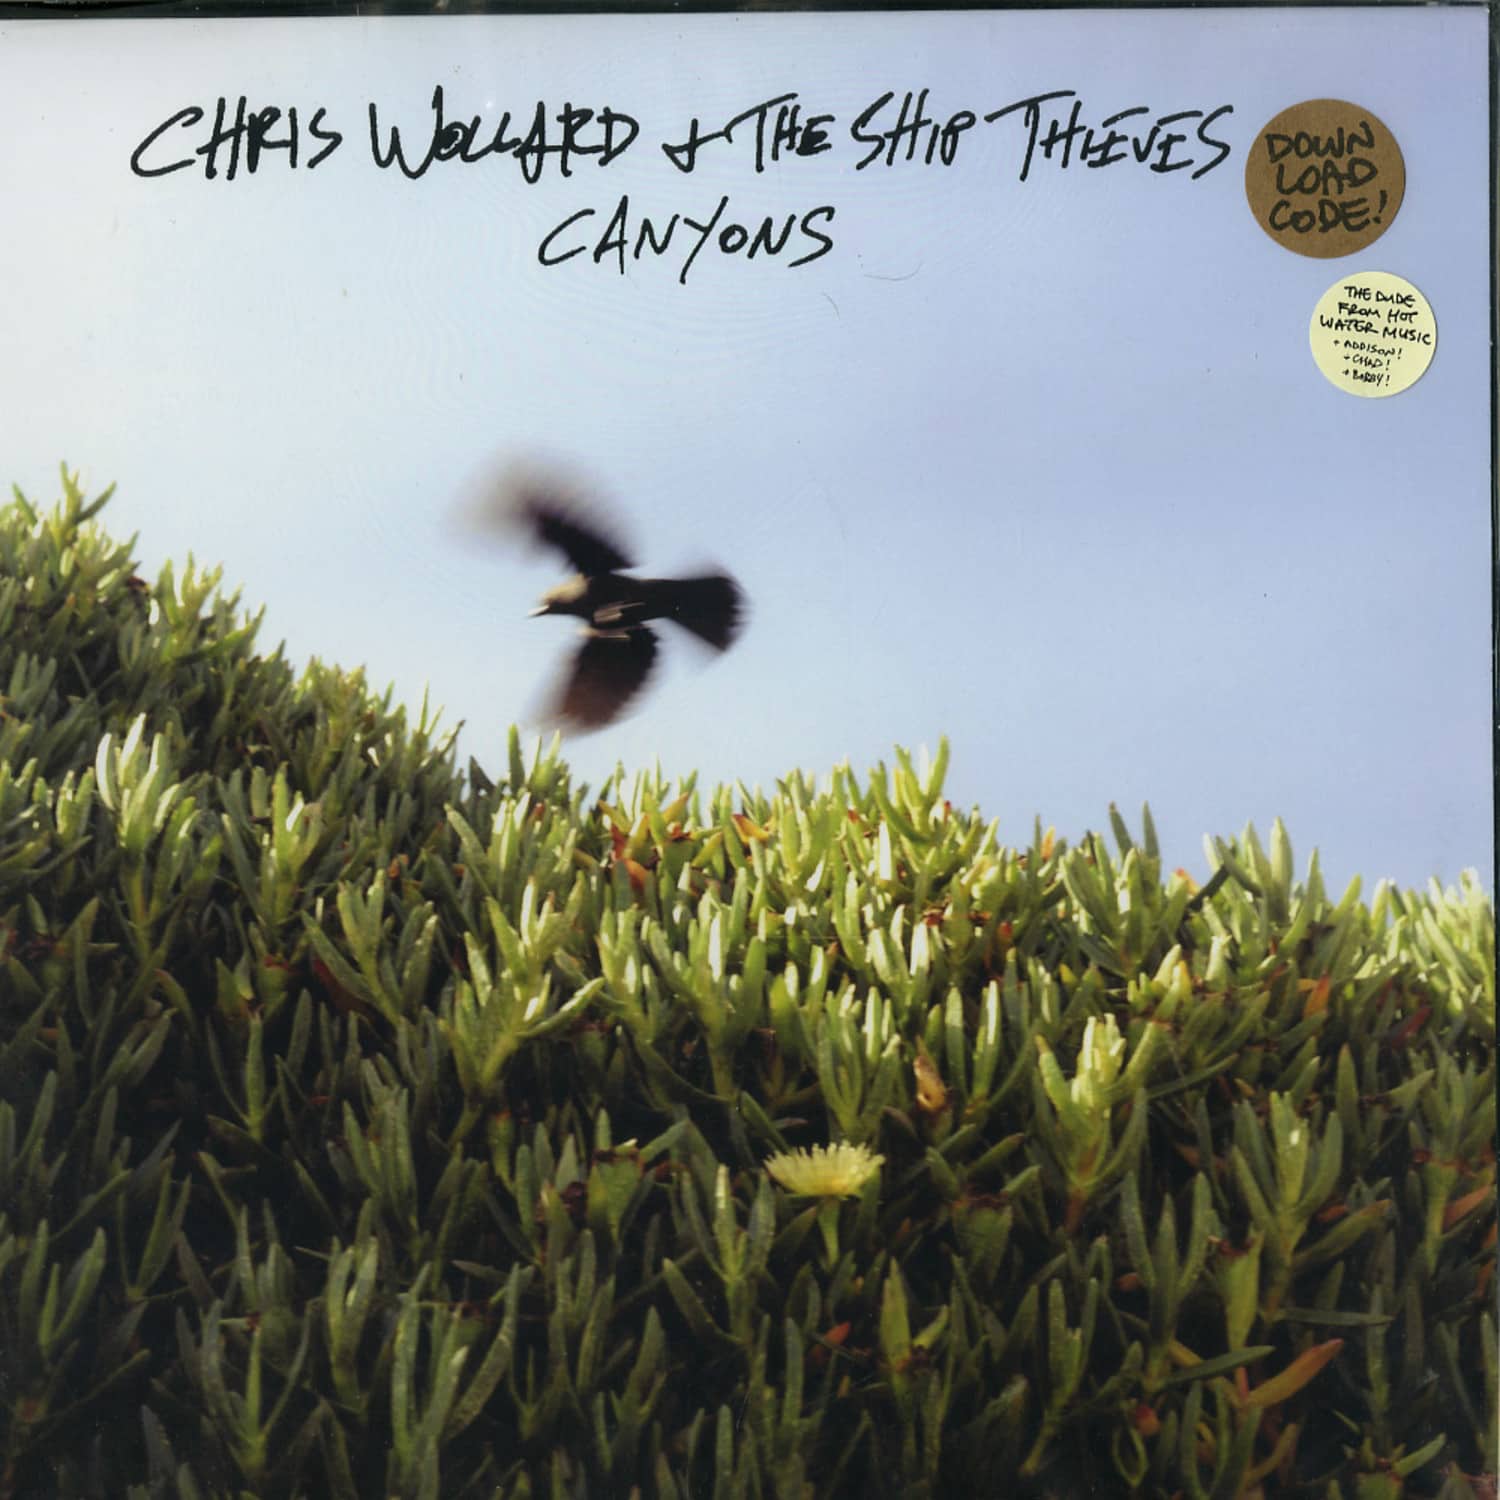 Chris Wollard & The Ship Thieves - CANYONS 